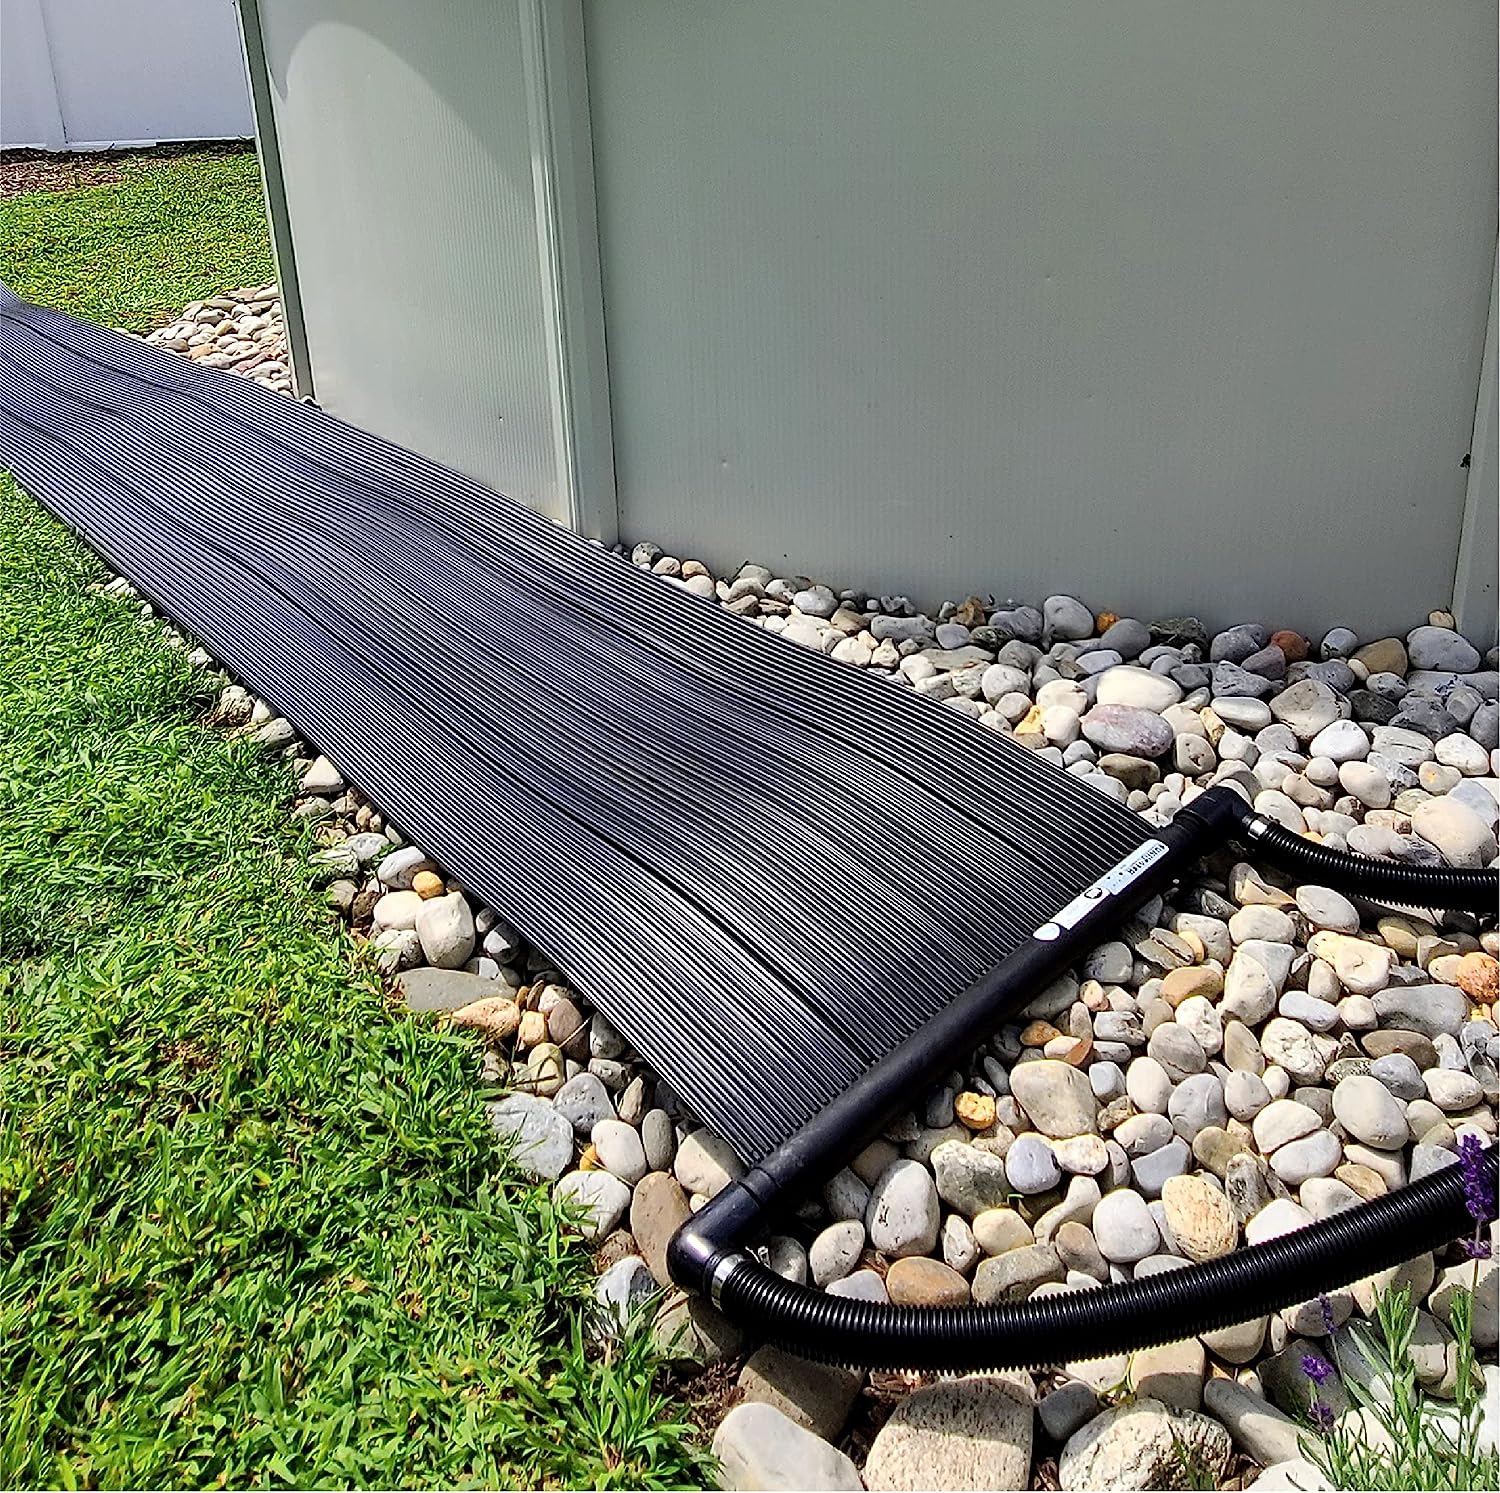 2' x 20' SunHeater S120U Universal Solar Pool Heater (Black) $118.61 + Free Shipping